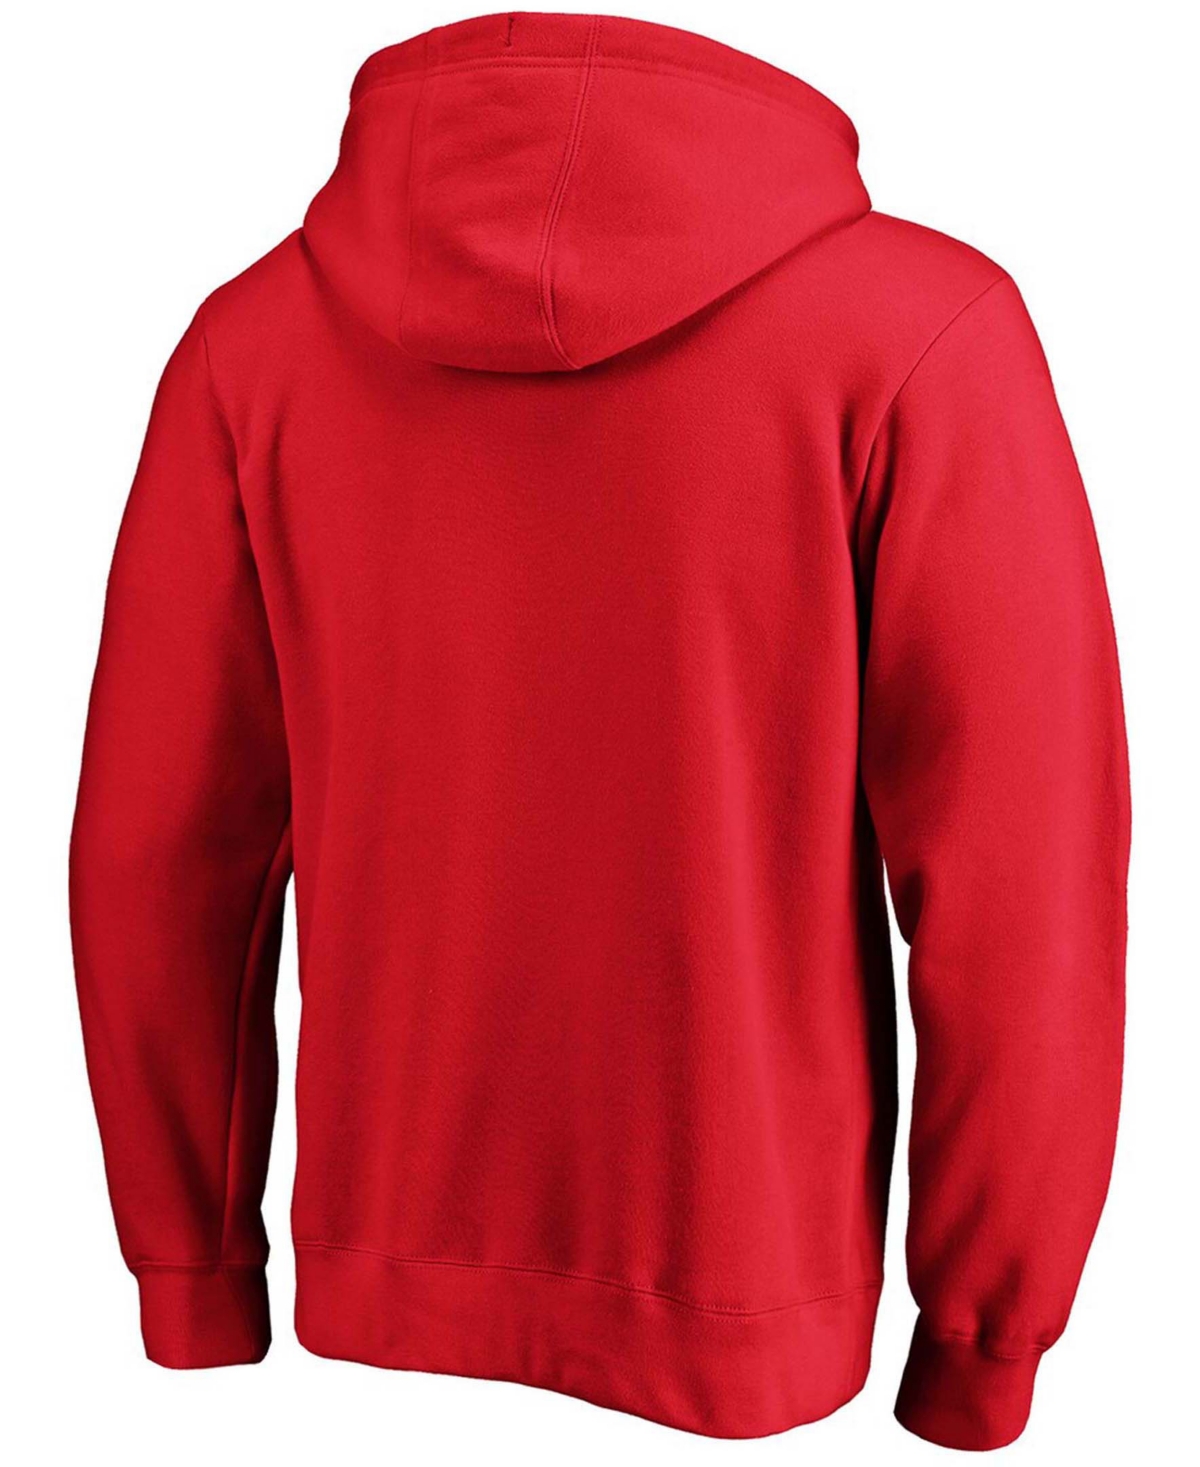 Shop Fanatics Men's Red Washington Capitals Primary Logo Pullover Hoodie